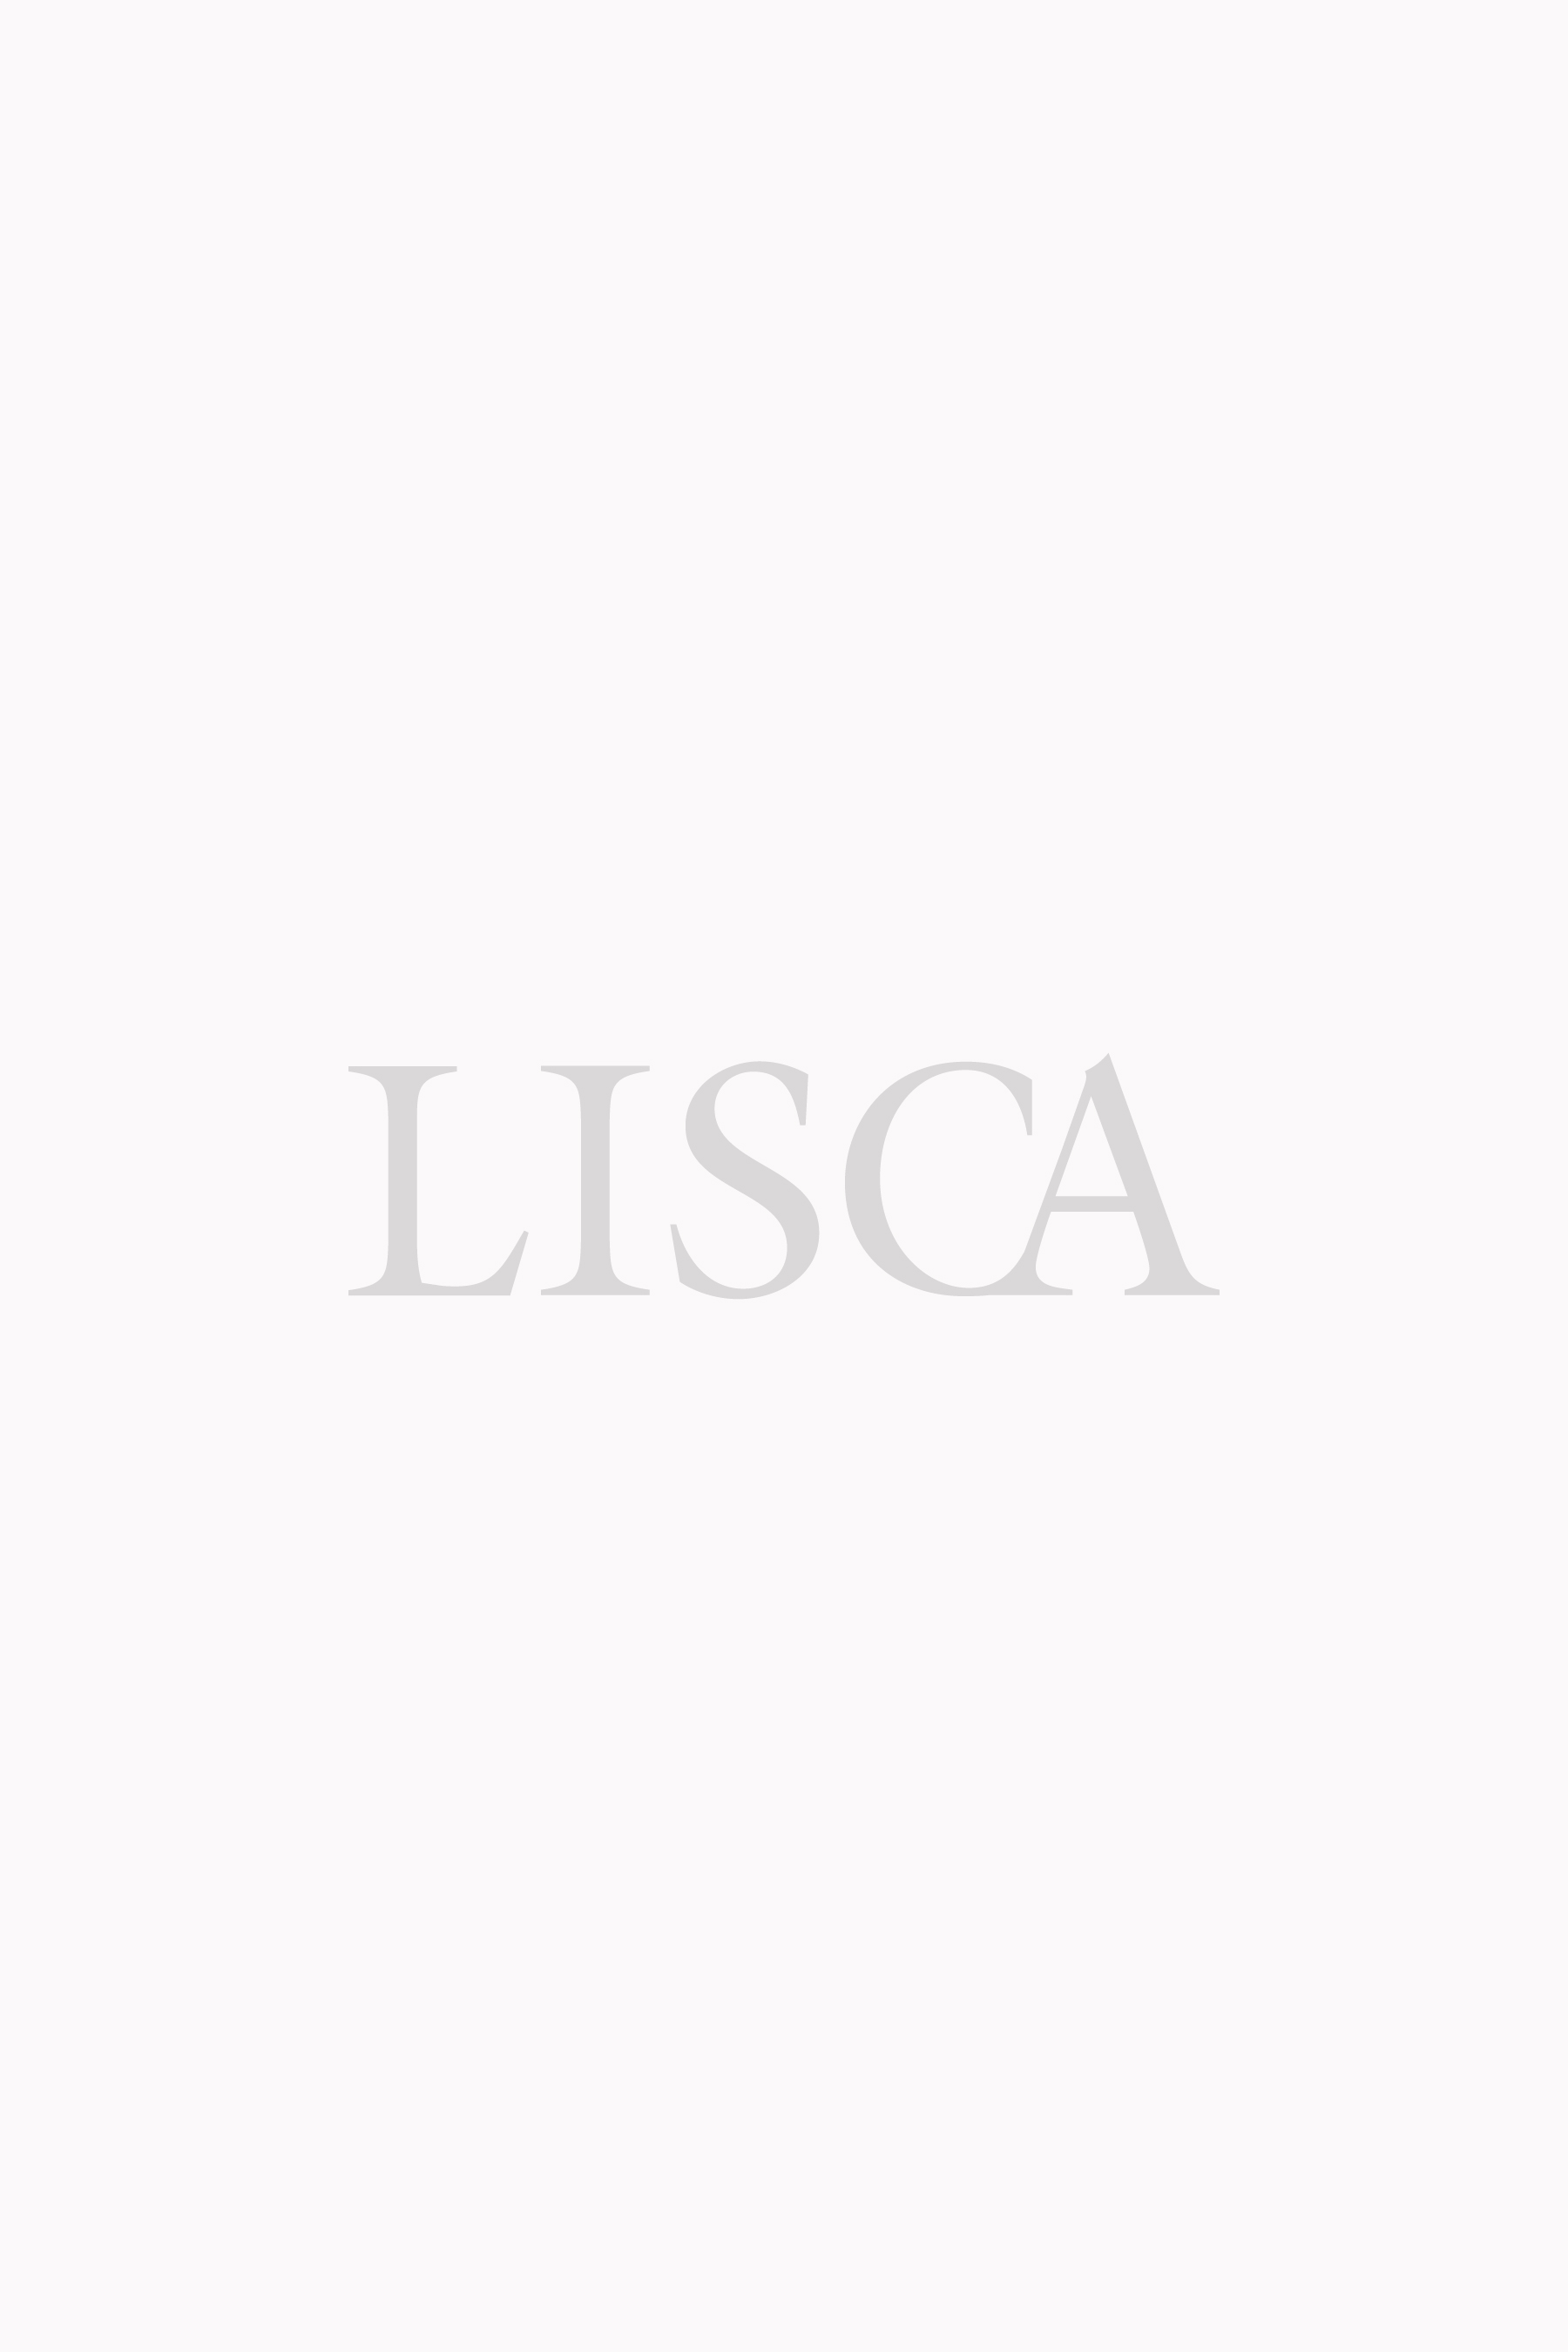 Bando градник со пенесто обликувани корпи, без жица Fruity - Cheek by Lisca